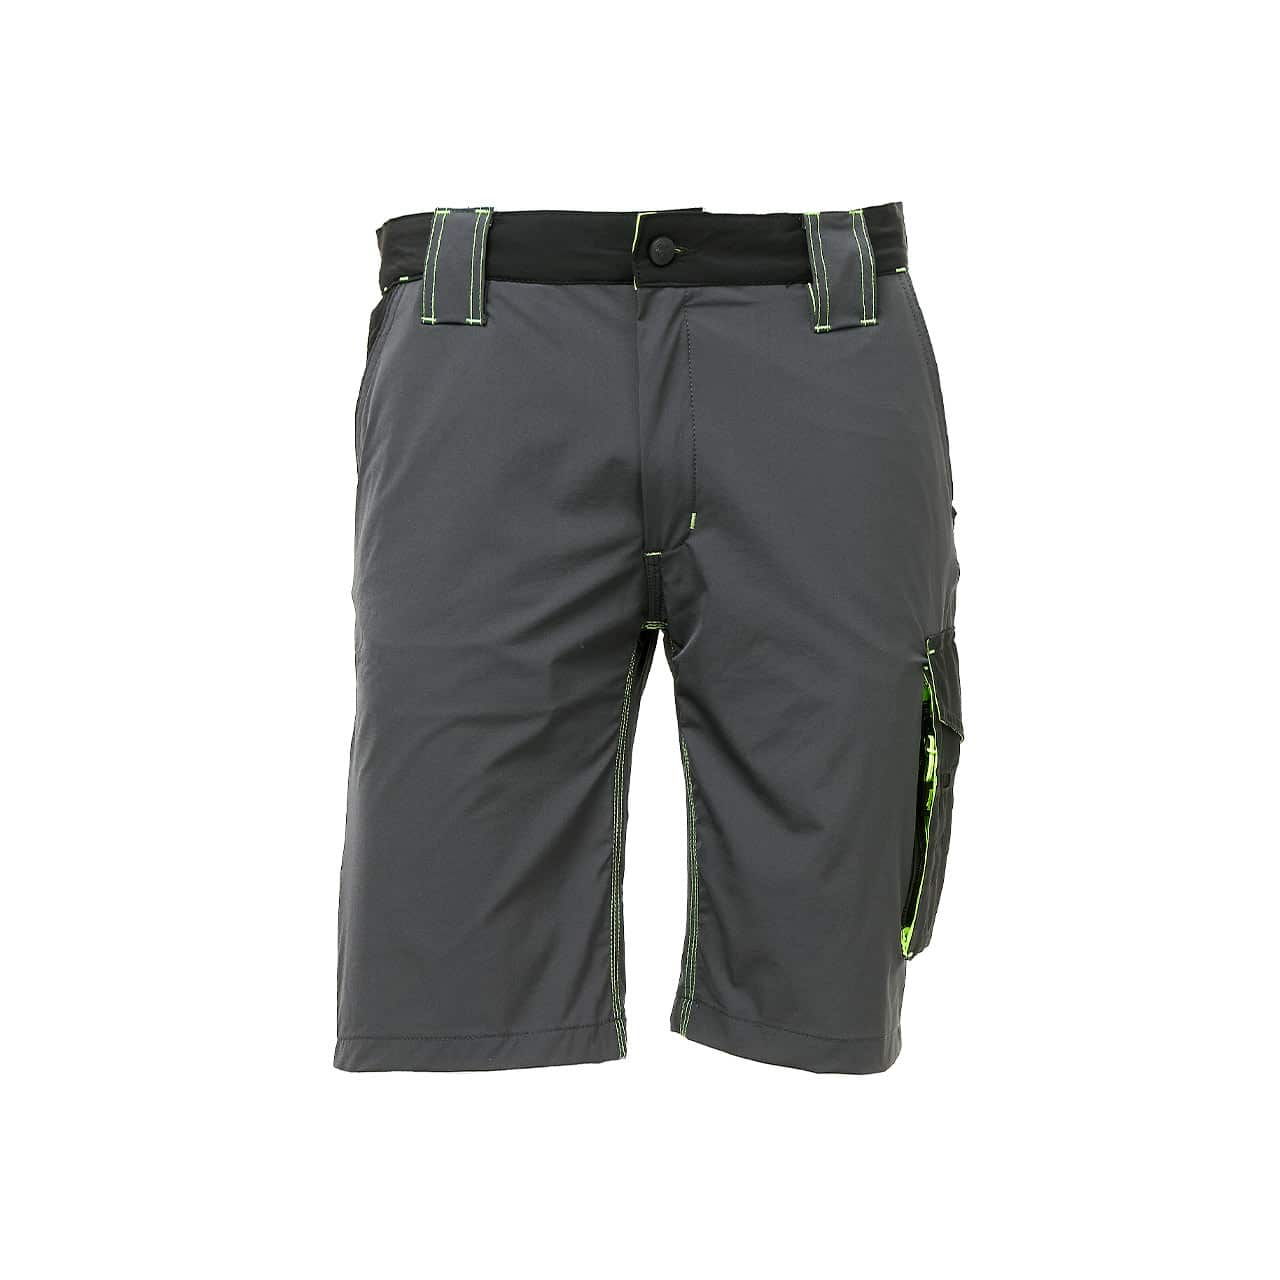 Pantaloni corti da lavoro U-Power Mercury grigio verde